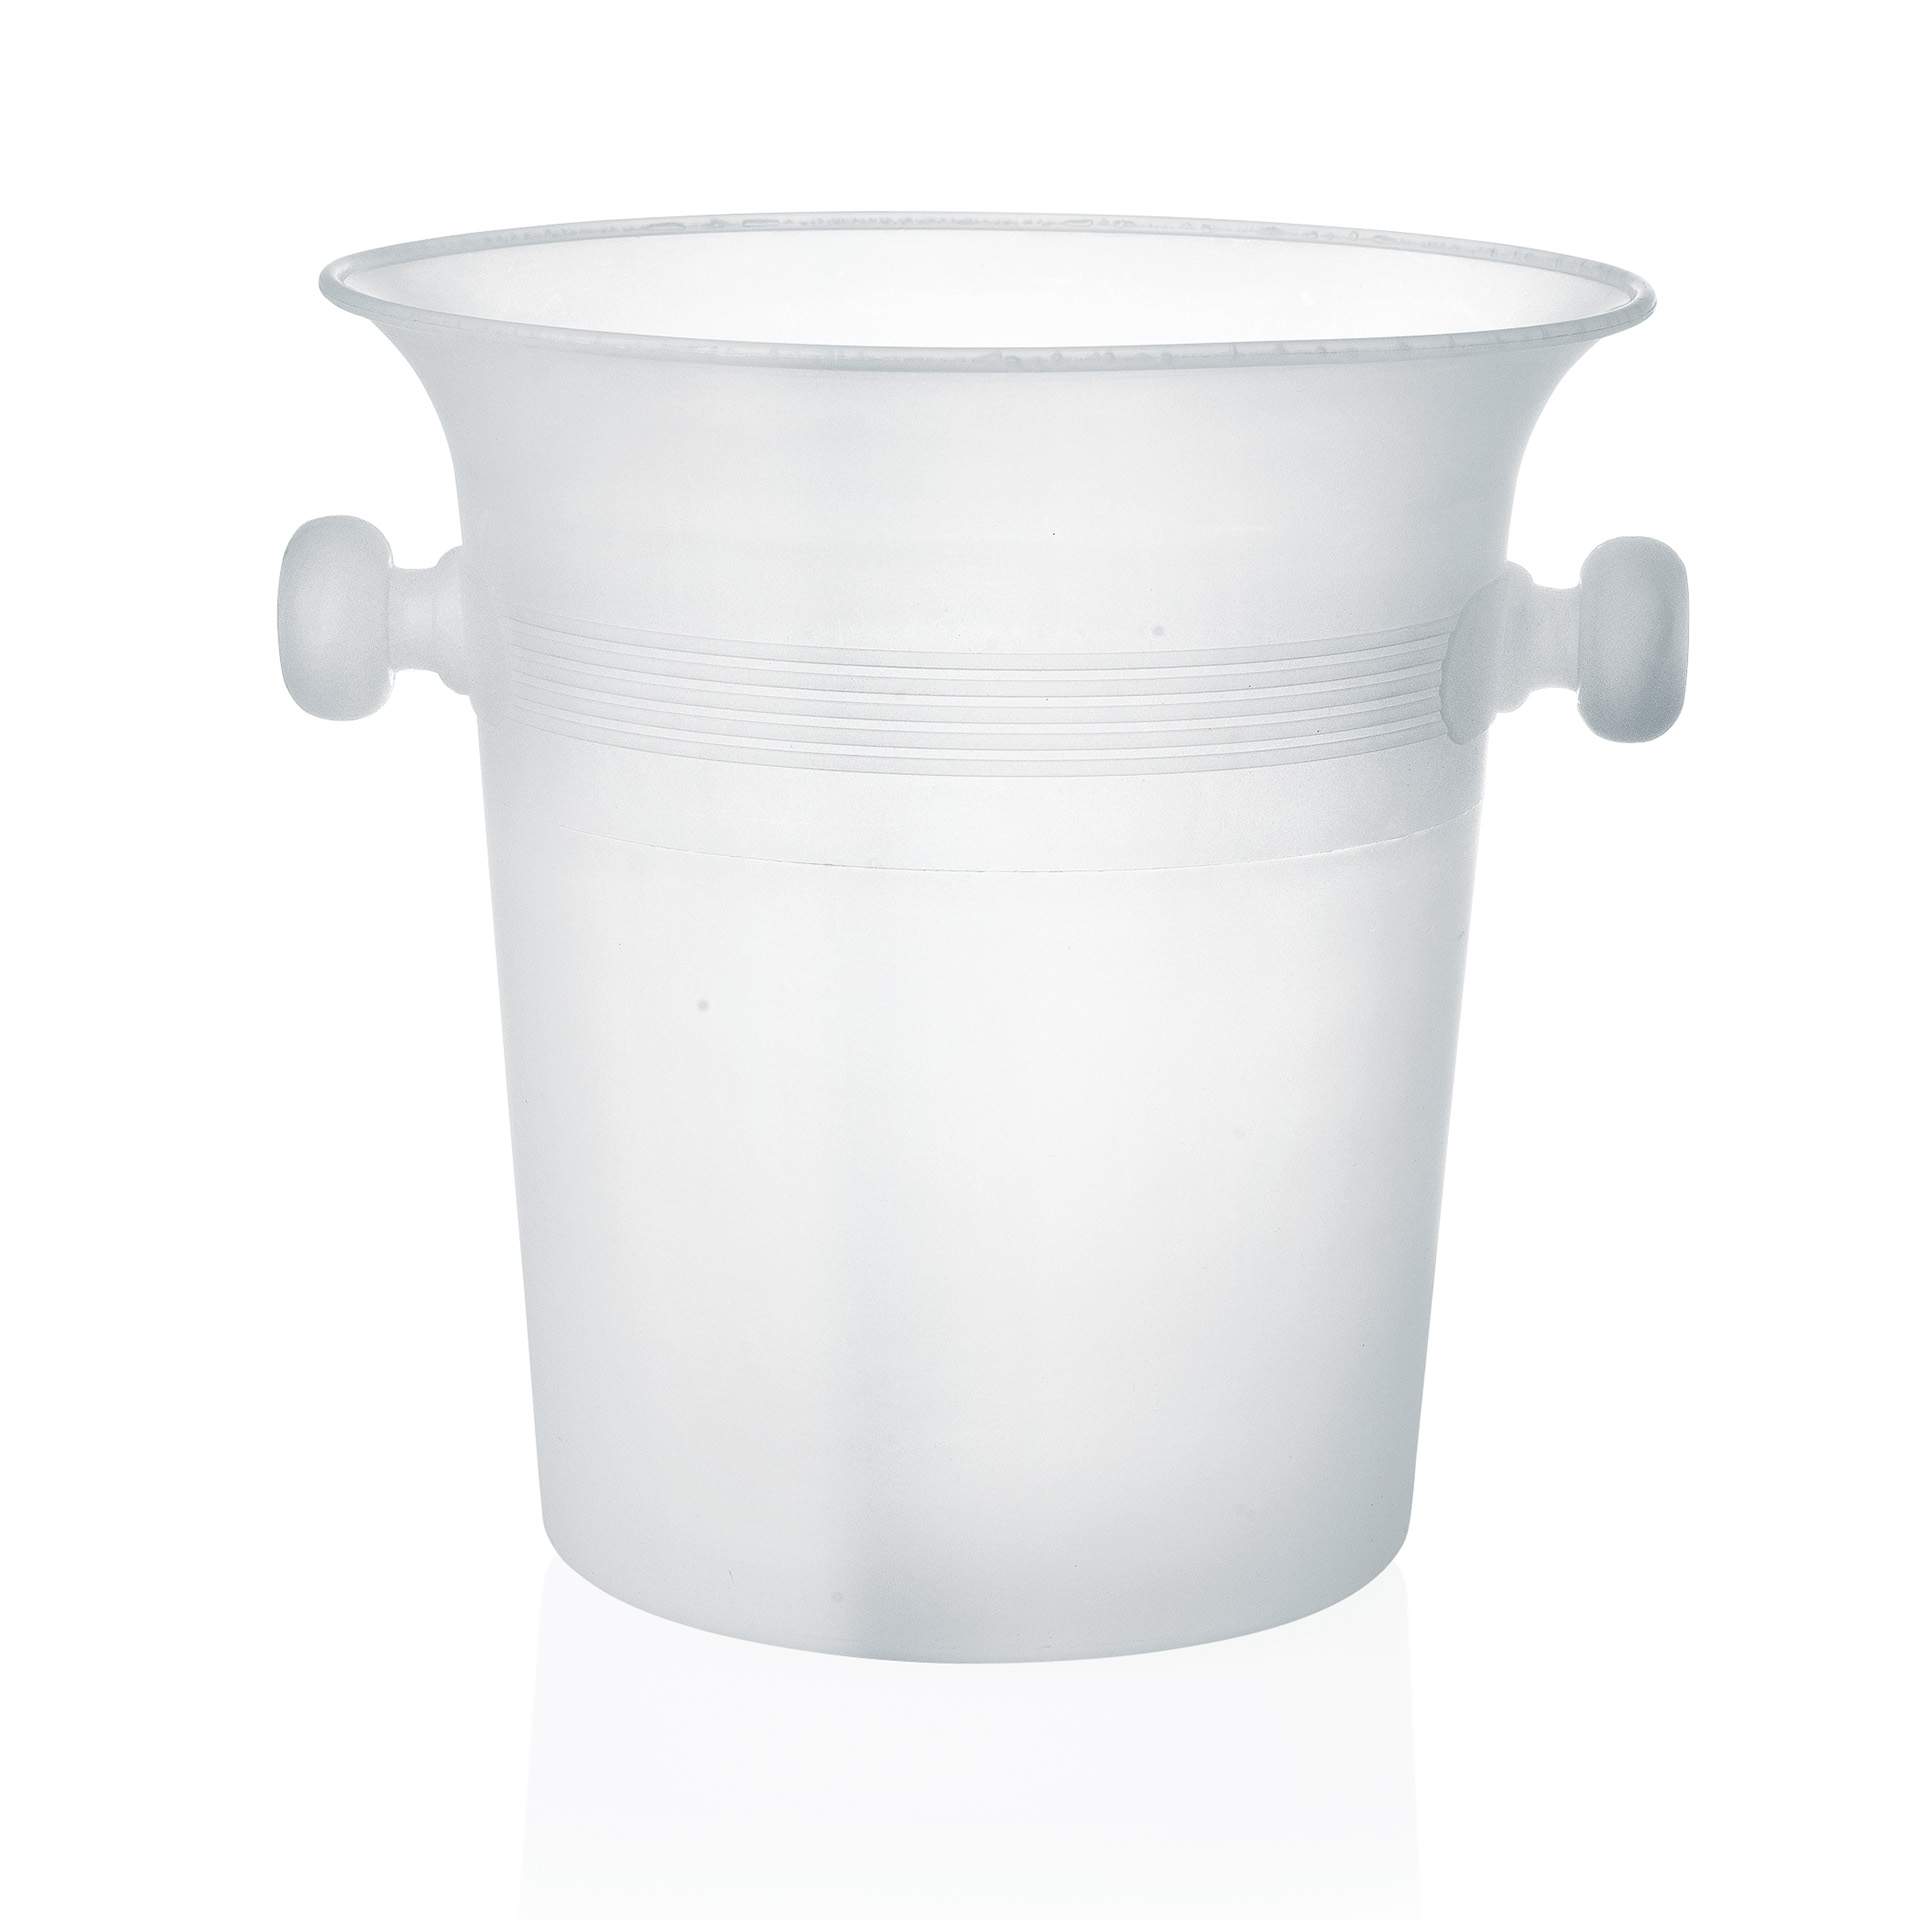 Flaschenkühler - transparent - Abm. 20,5 cm - Ø 20,5 cm - Inhalt 4,0 l - Polypropylen - 1529205-A